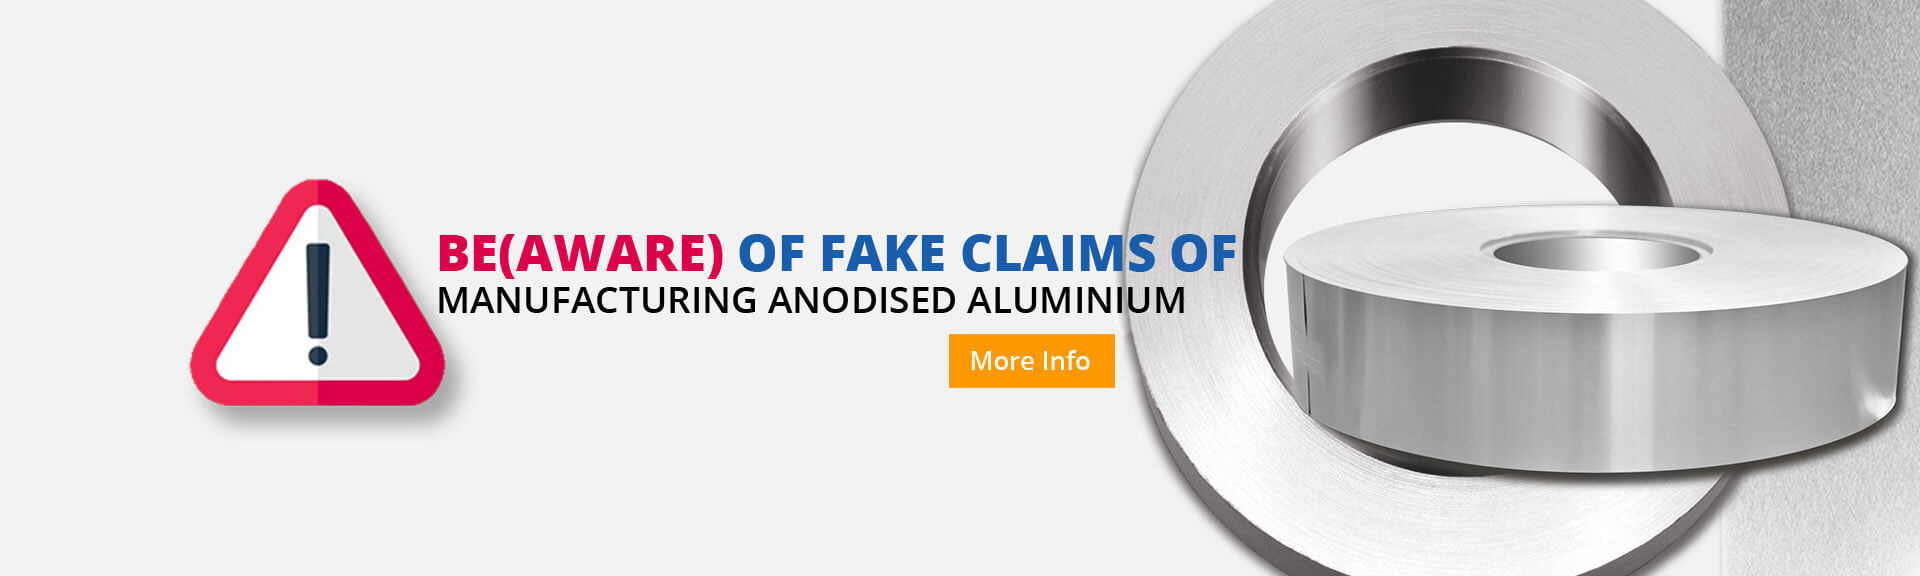 1.fake-claims-anodise-aluminium